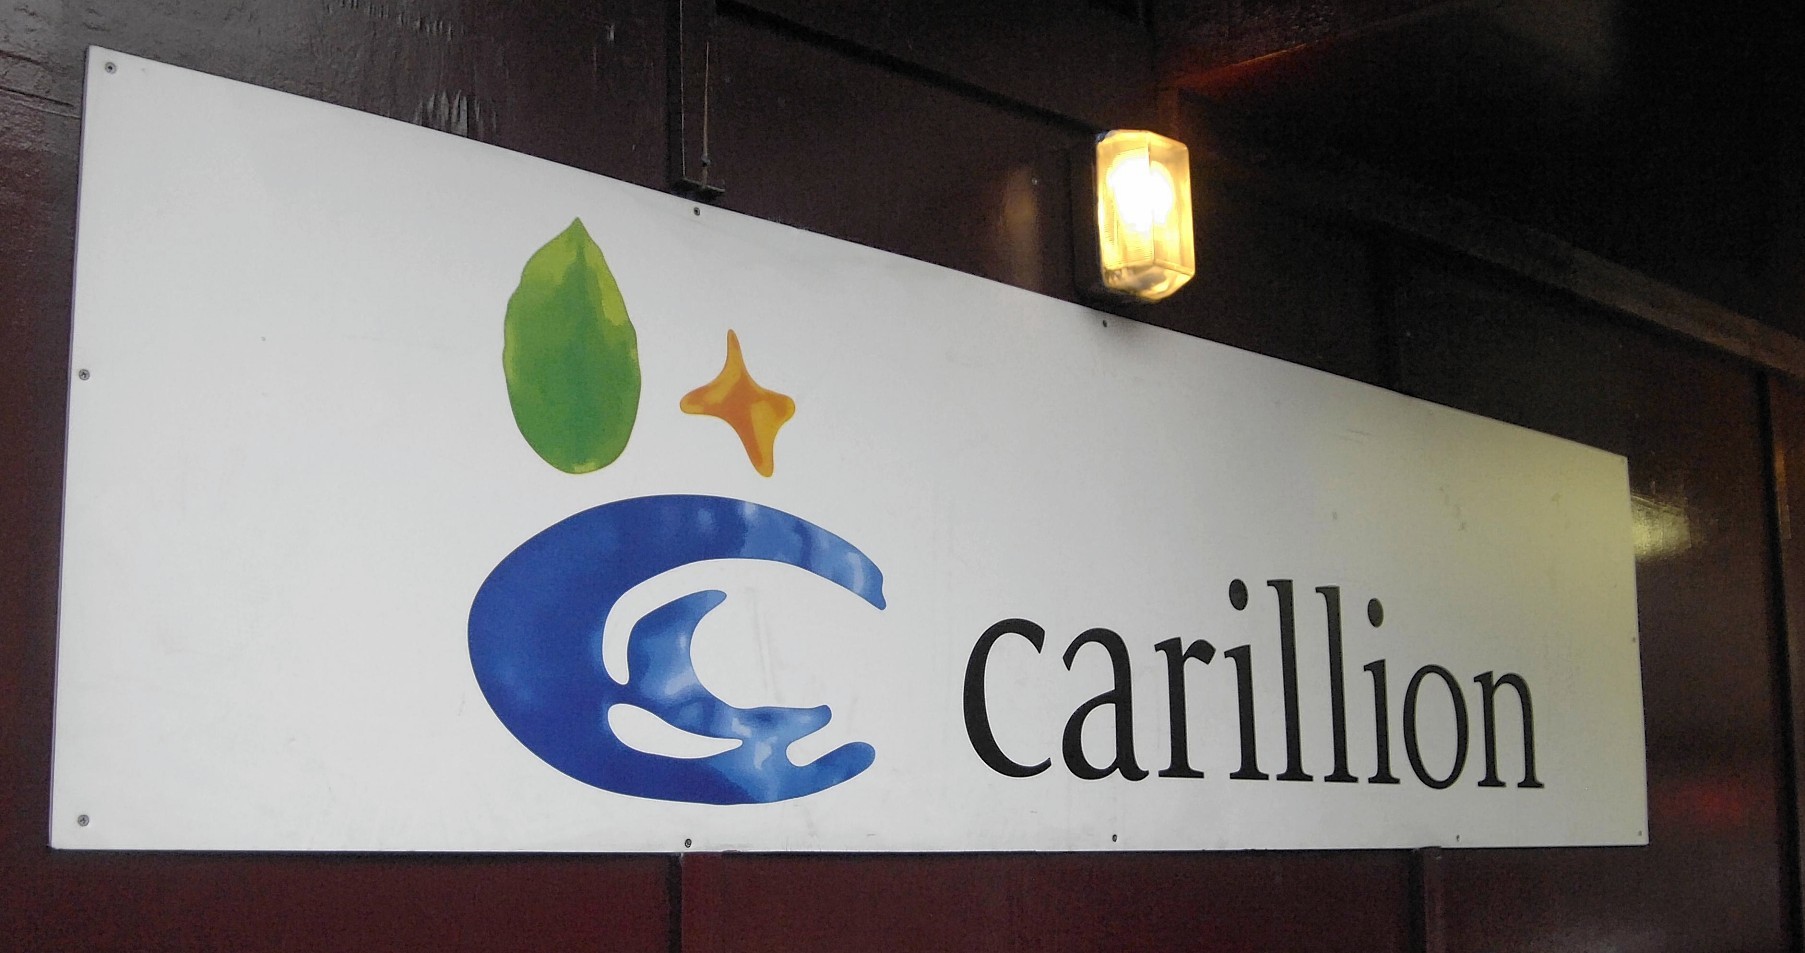 Carillion news